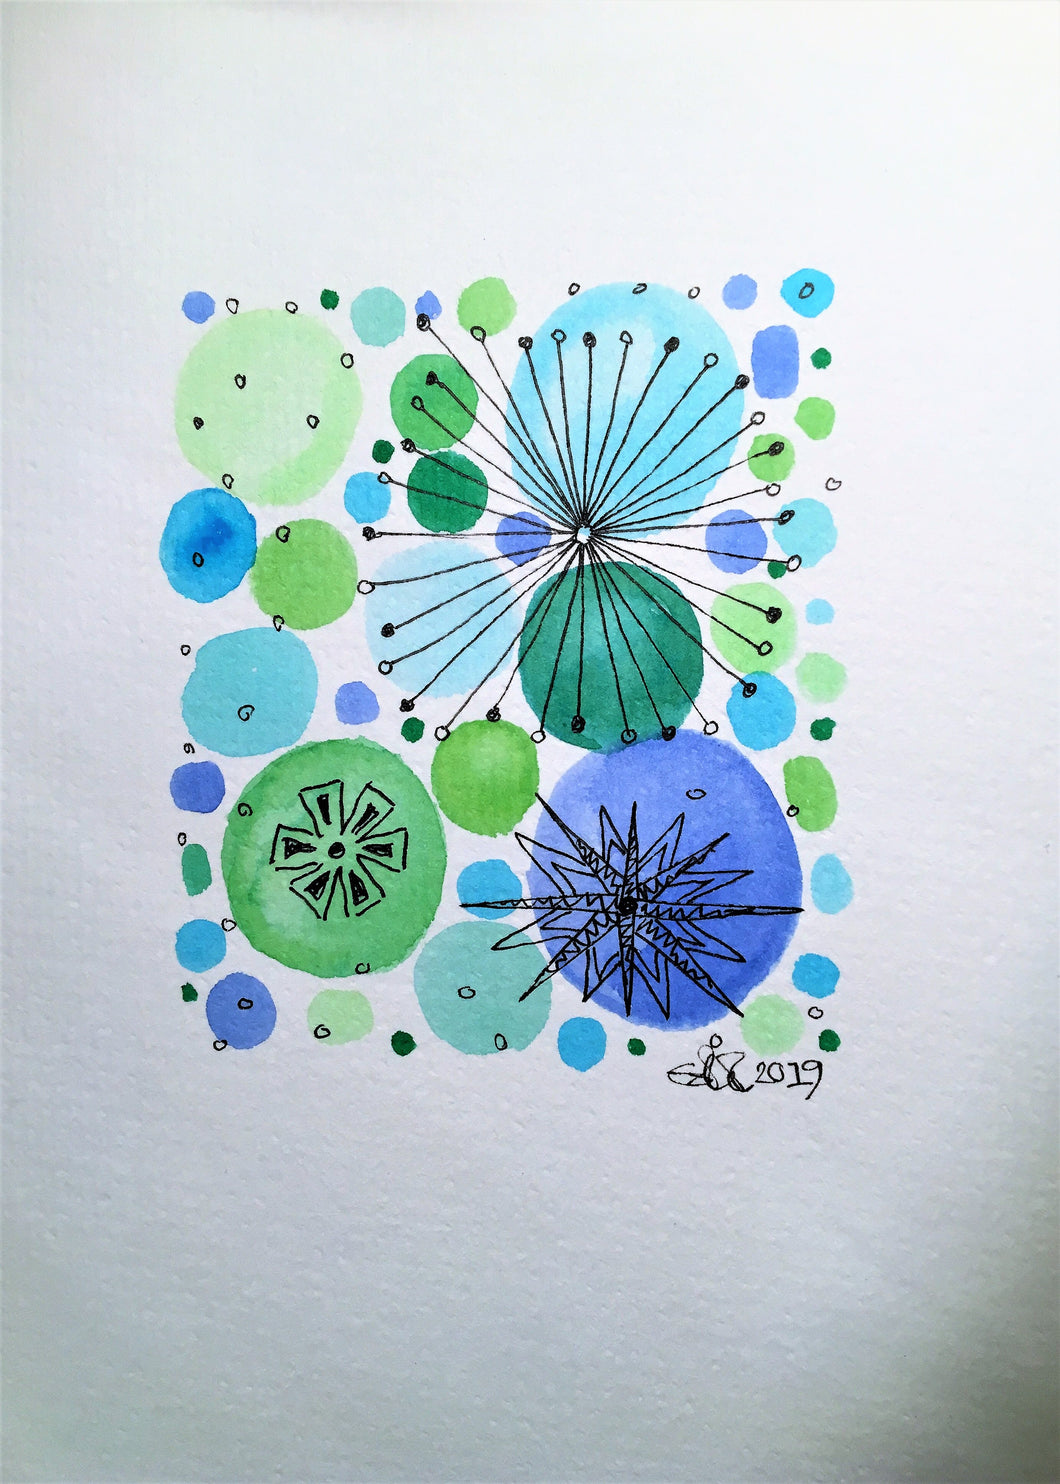 Handpainted Watercolour Greeting Card - Blue/Green with Circle/Star Design - eDgE dEsiGn London